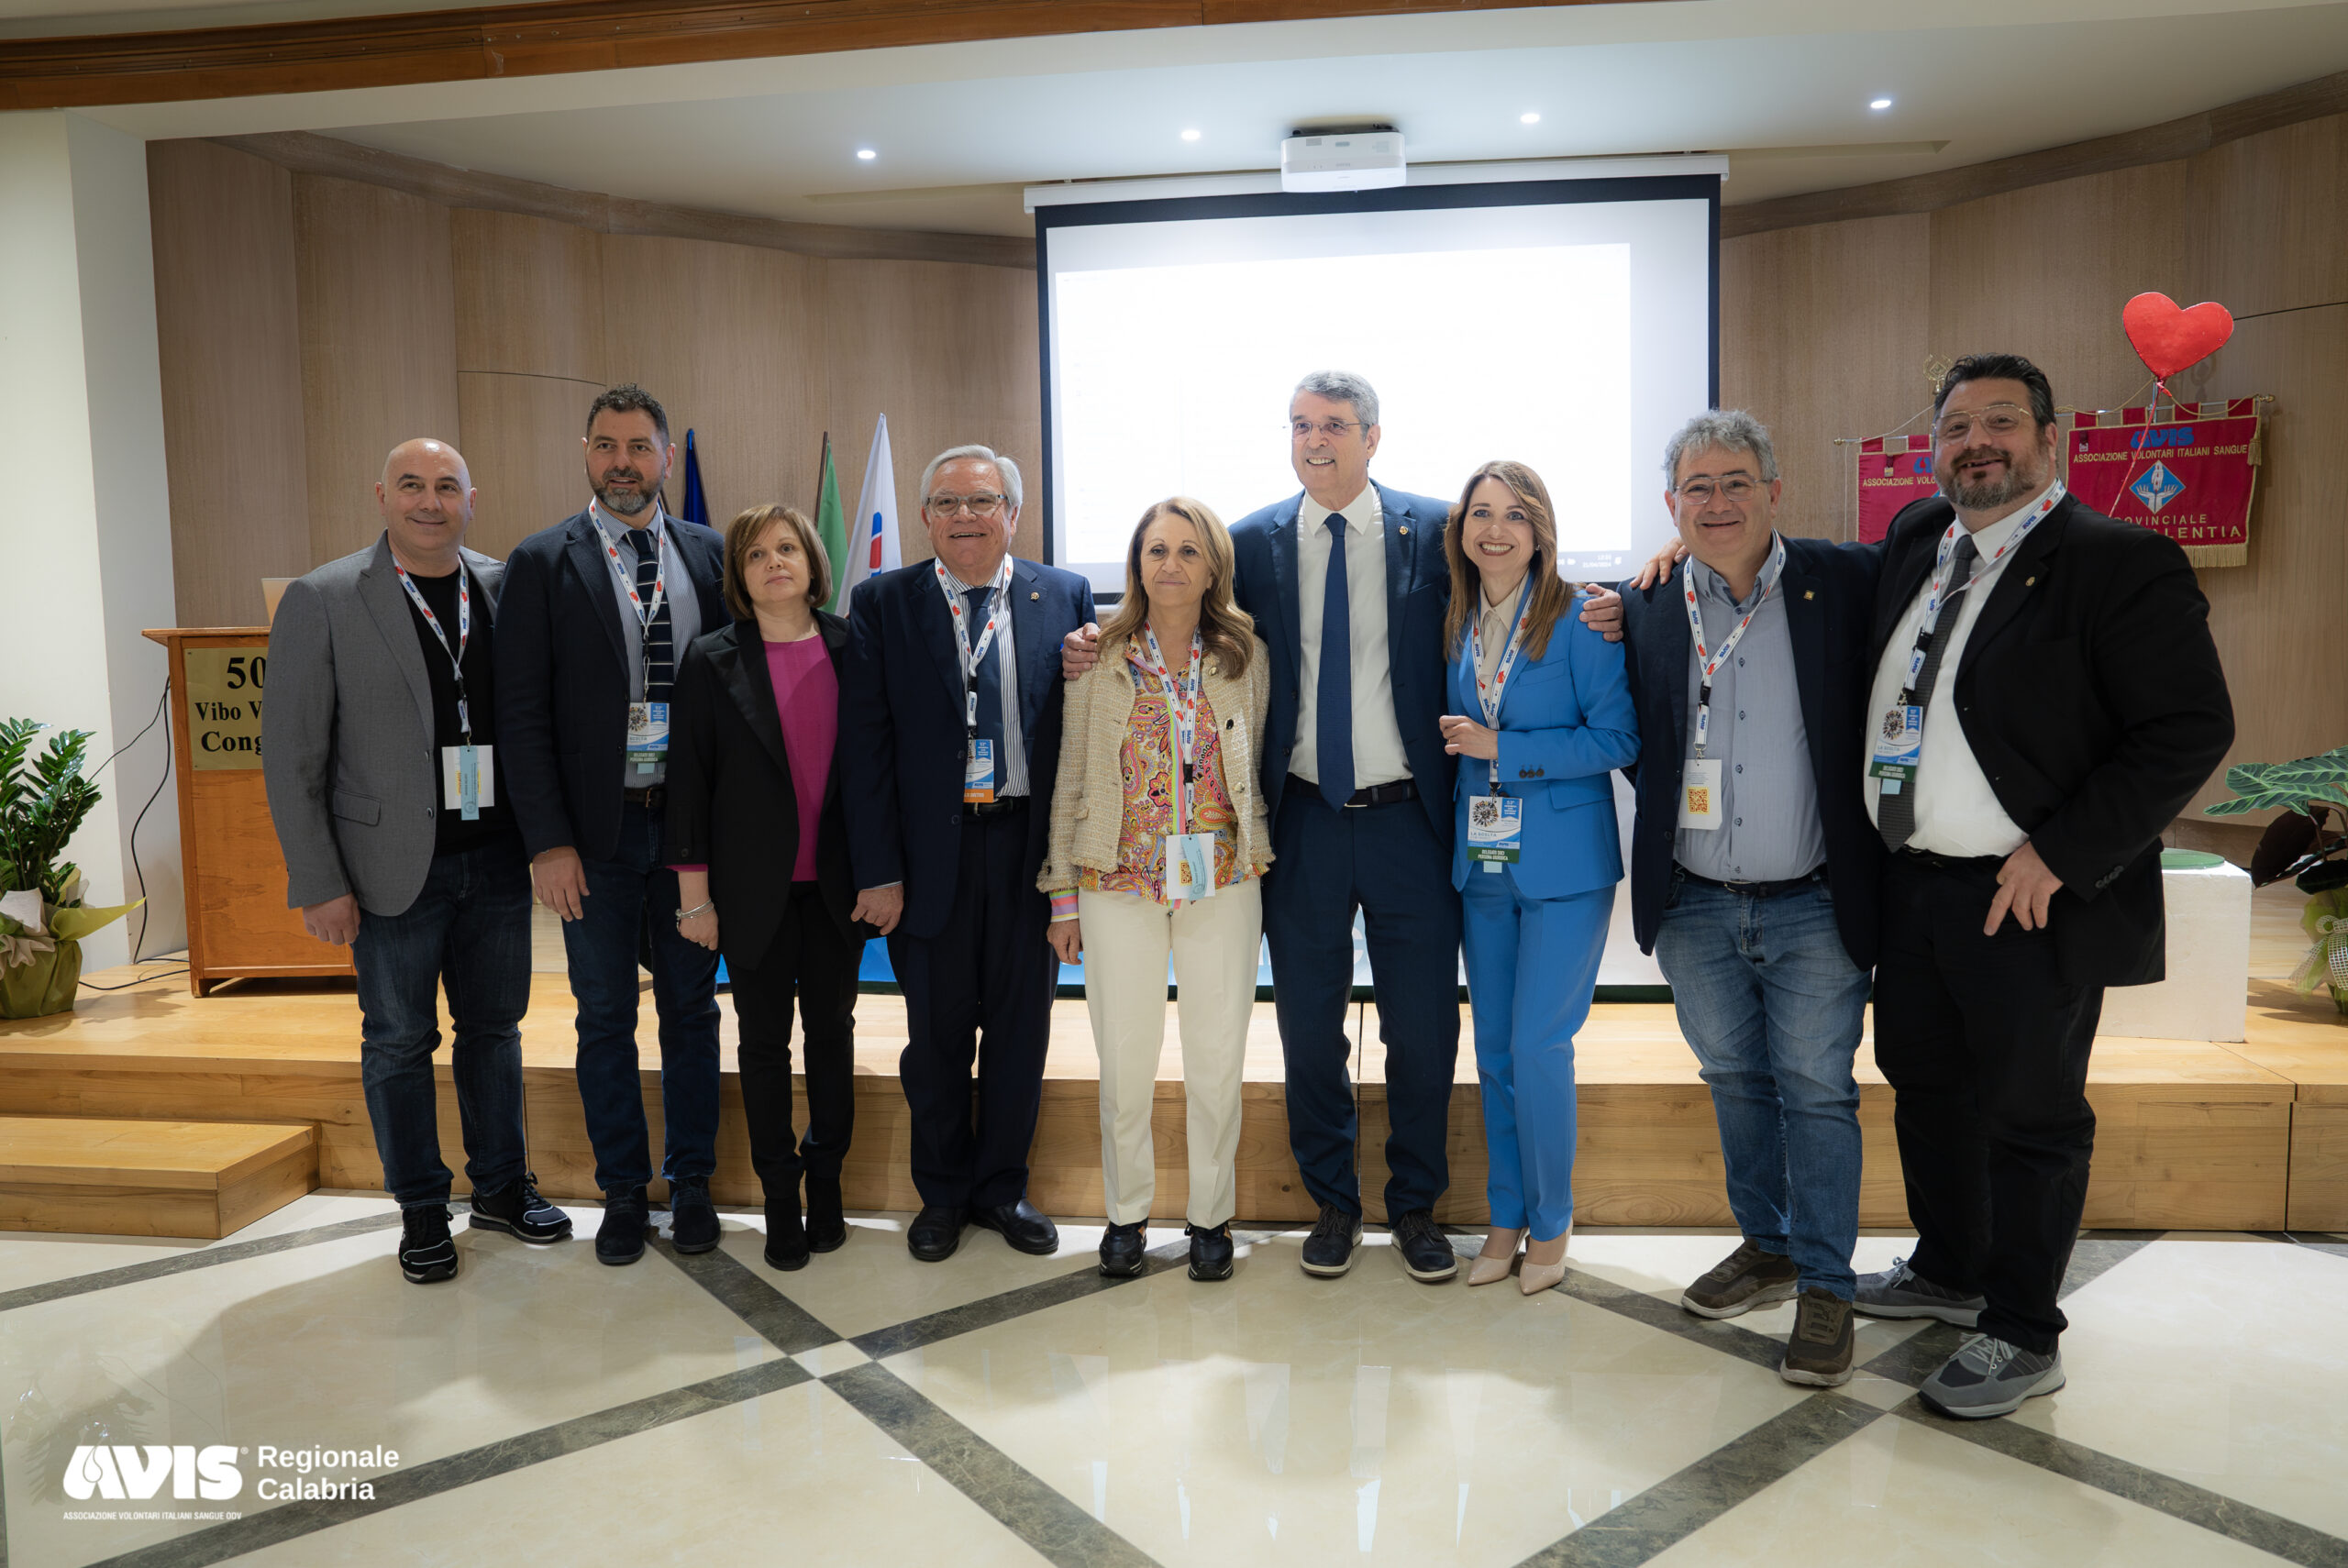 Unione e cooperazione: grande successo per l’assemblea regionale di Avis Calabria